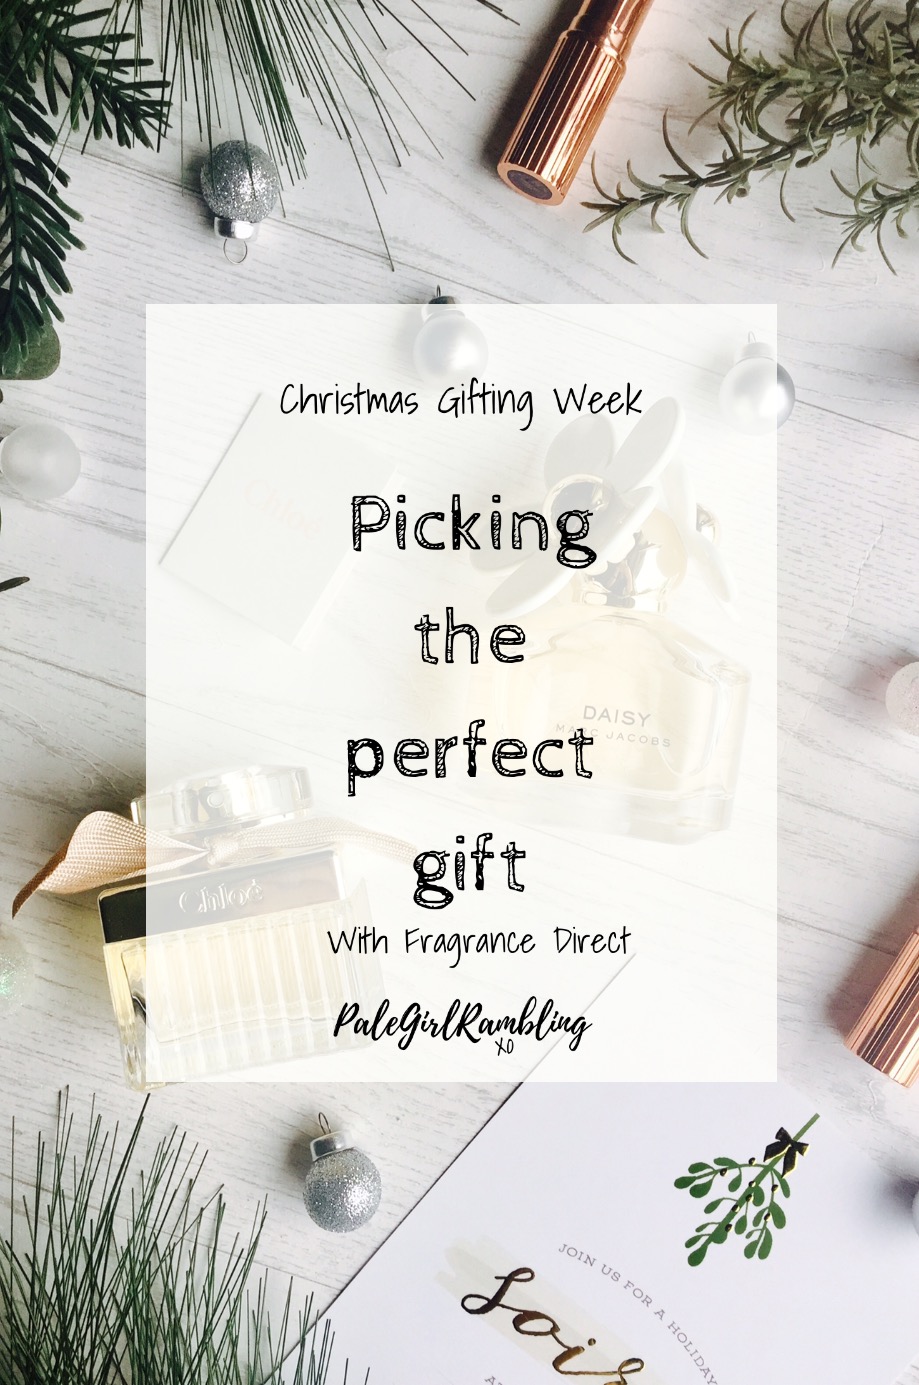 Christmas Gifting Week Fragrance Direct Marc Jacobs Chloe Daisy present ideas